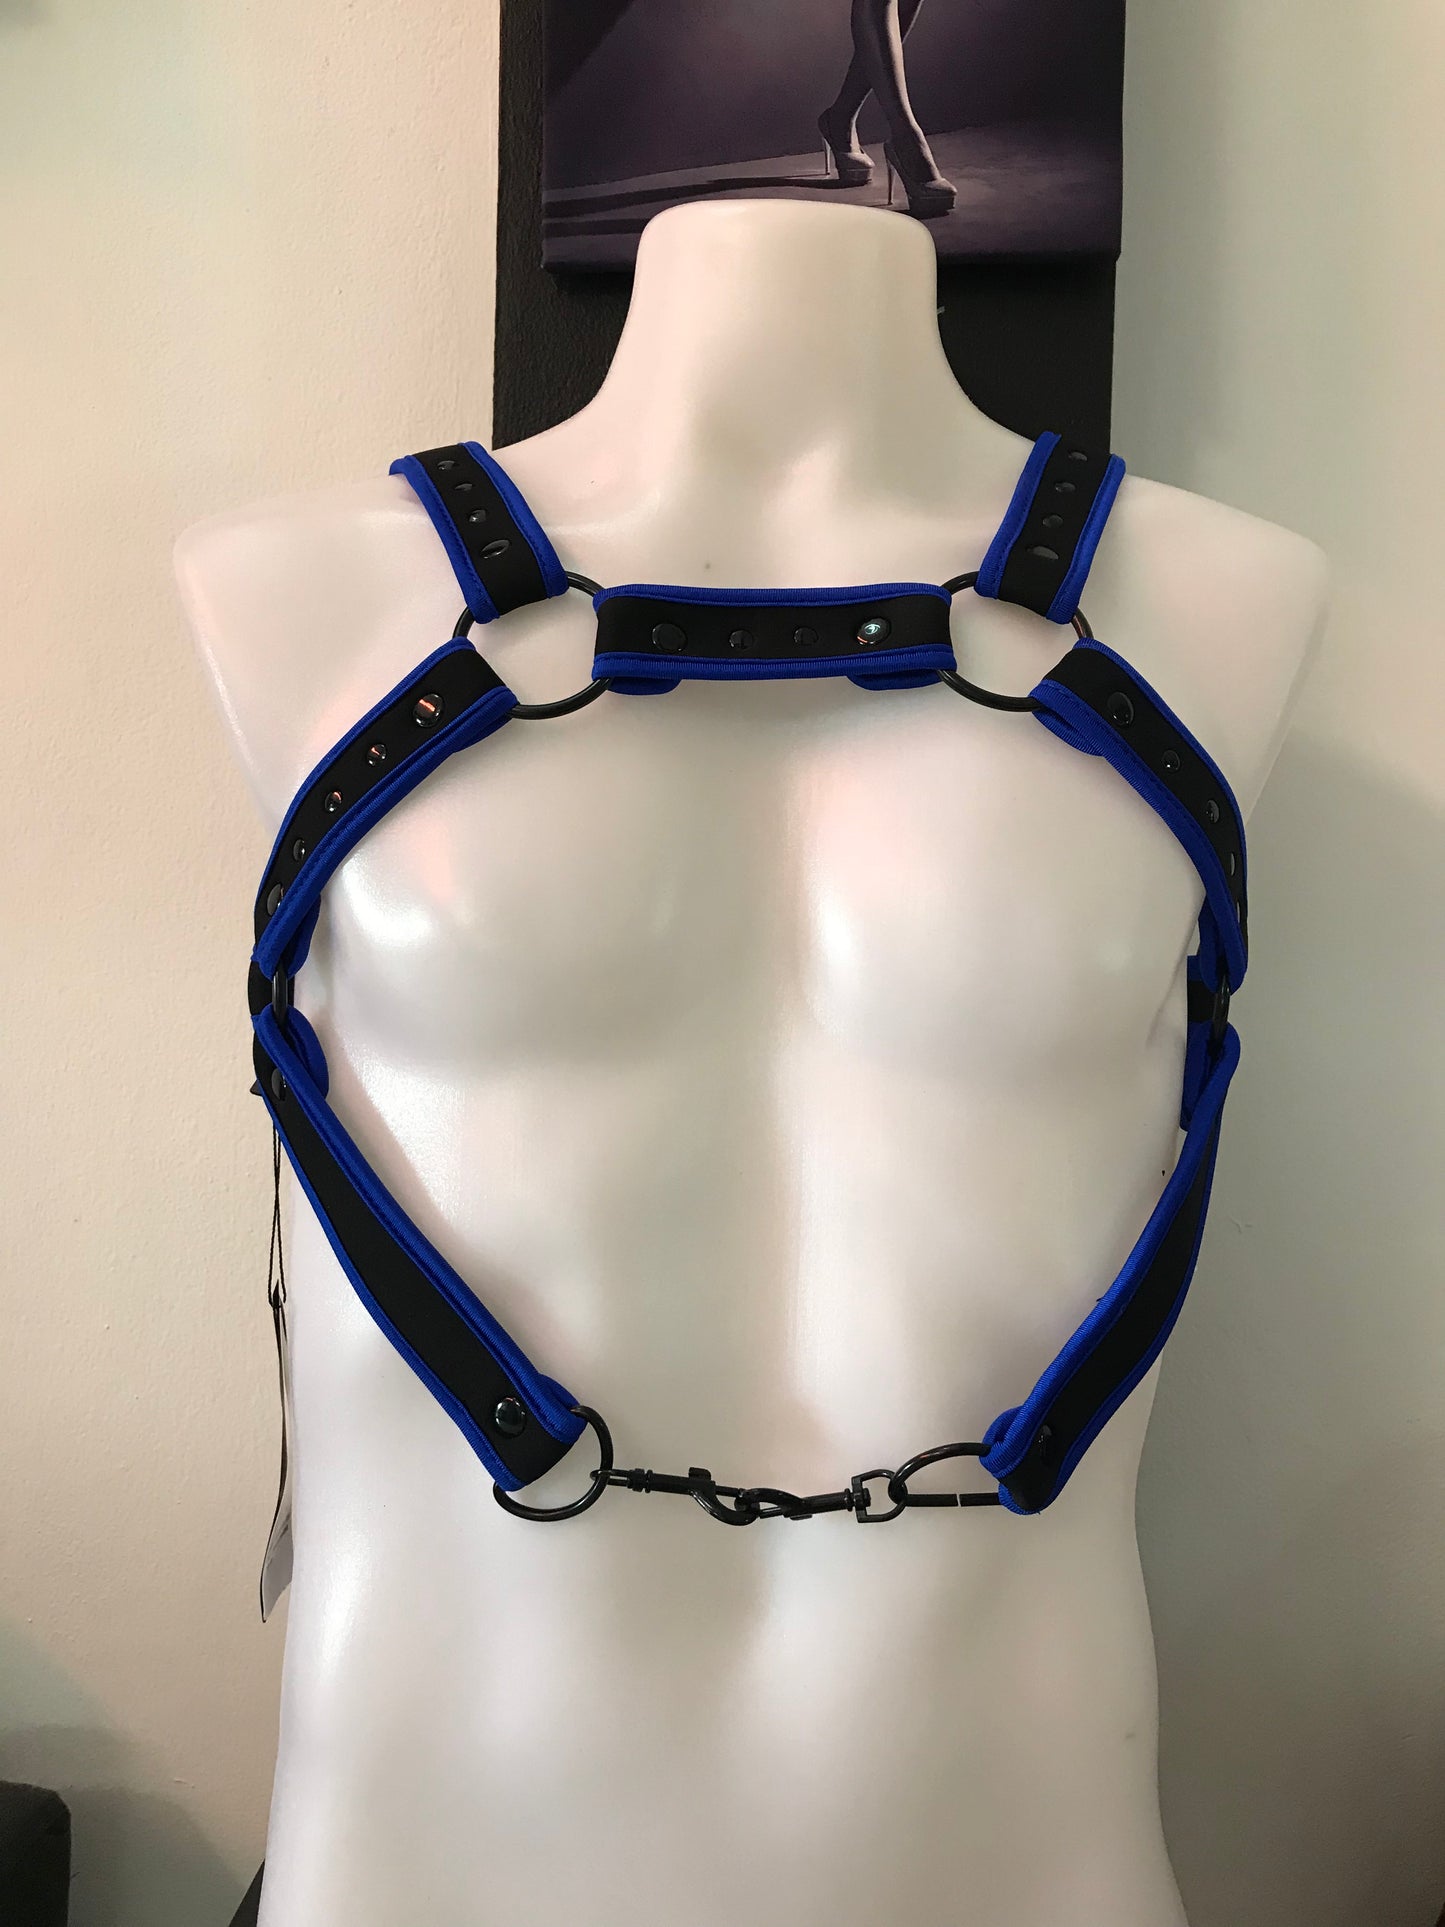 Neoprene harness - DM underwear